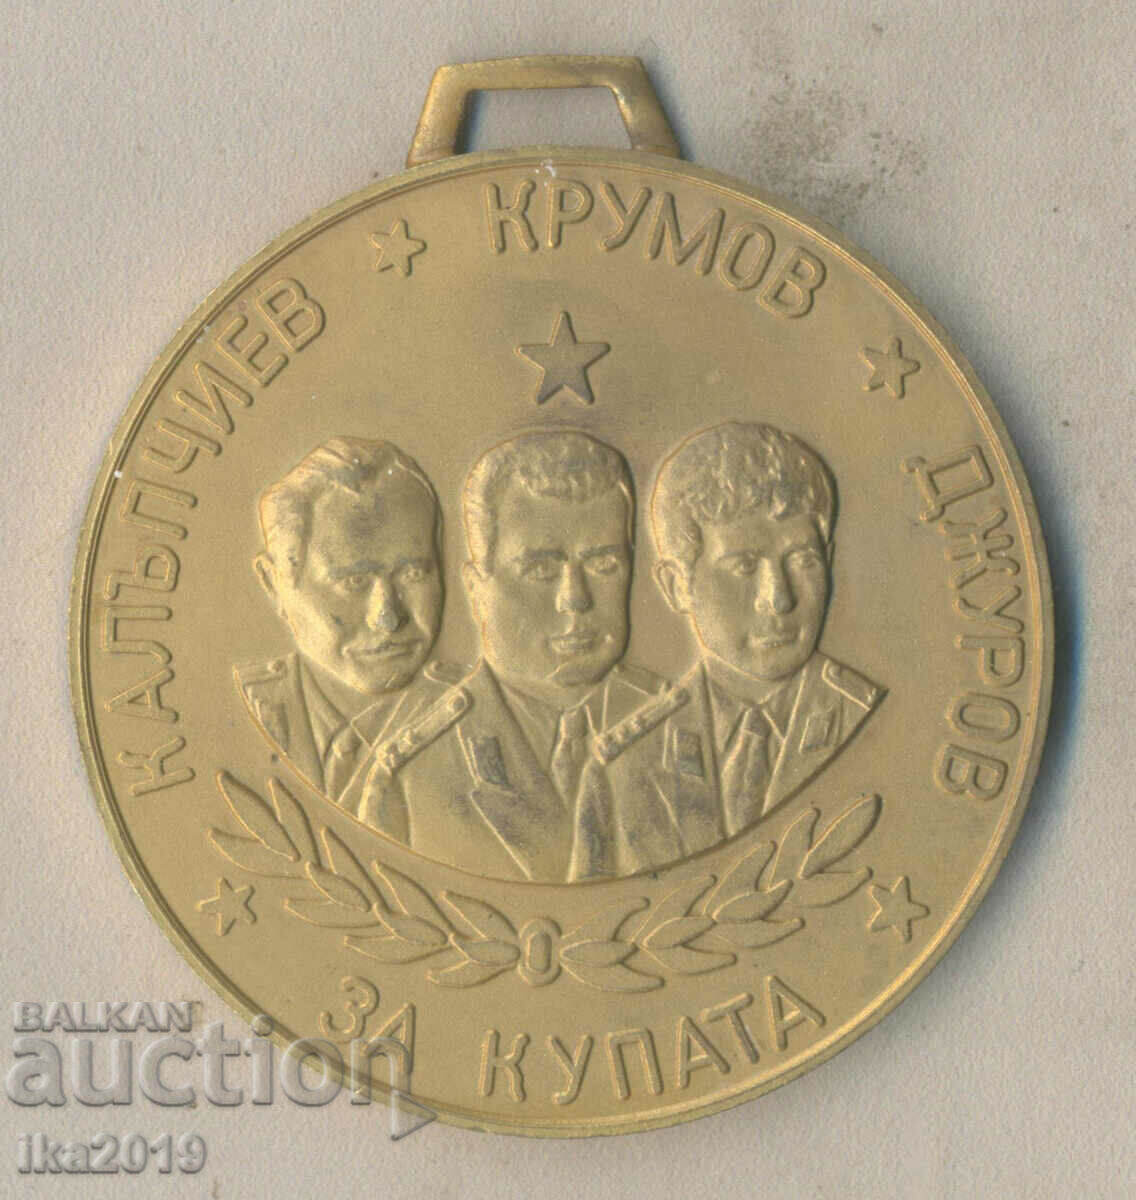 Rare Parachute Award Medal For the Cup Kalupchiev Krumov J